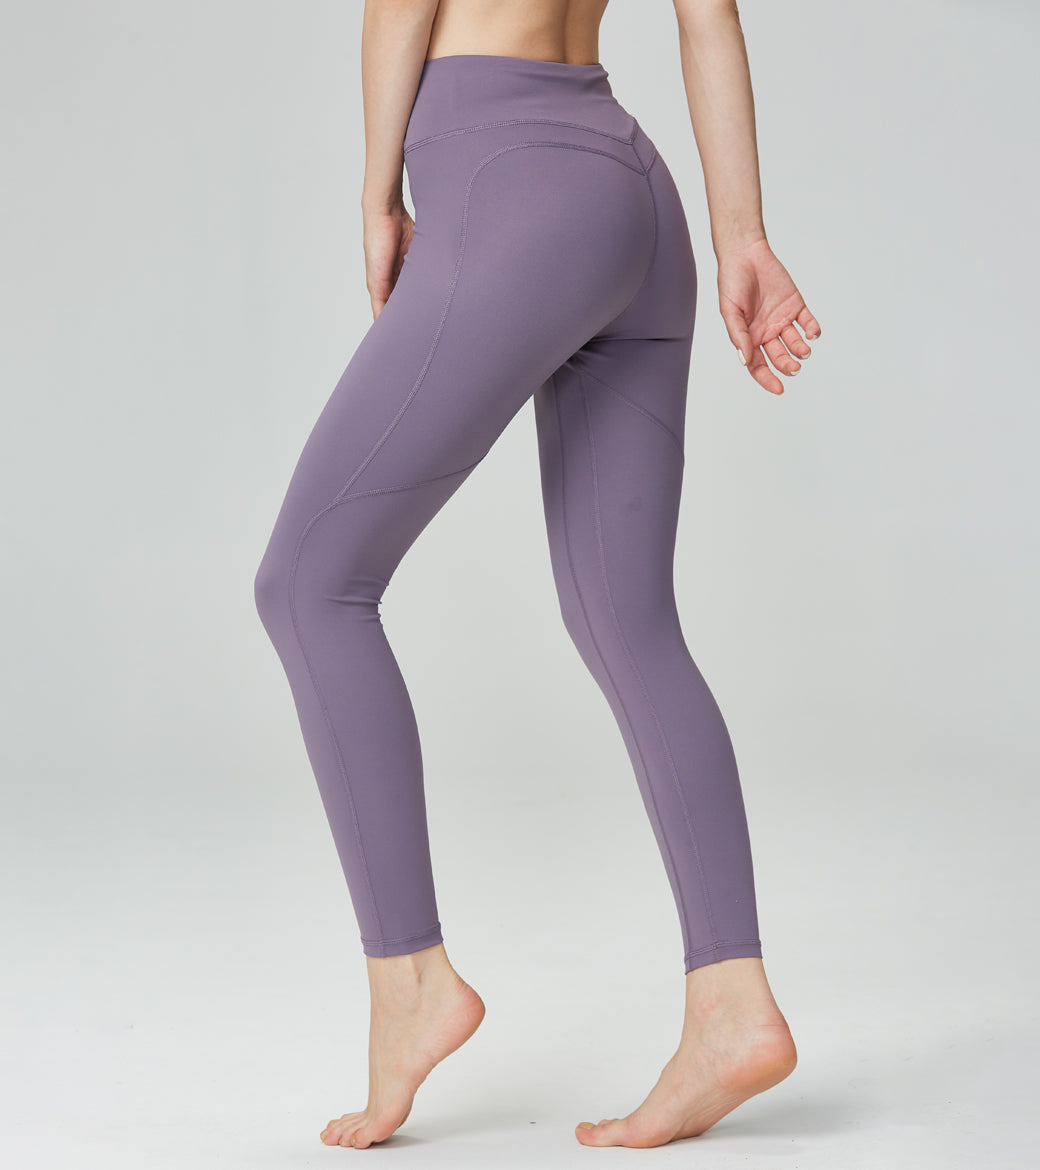 LOVESOFT Women's Purple Tight-fitting High-waist Hip-lifting Leggings